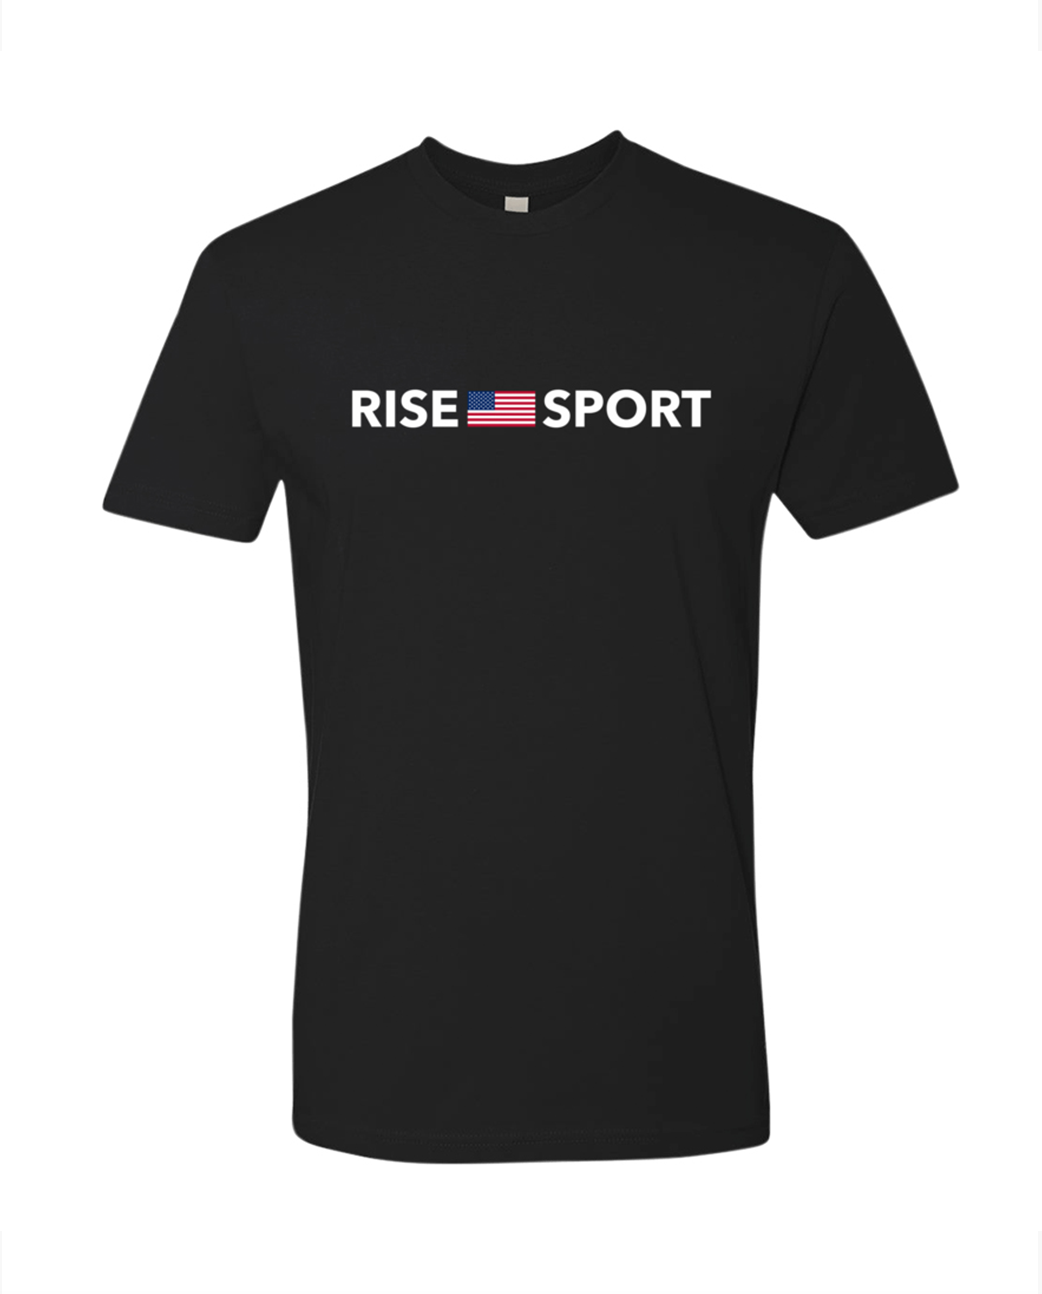 Rise Sport USA T-shirt Tee Black